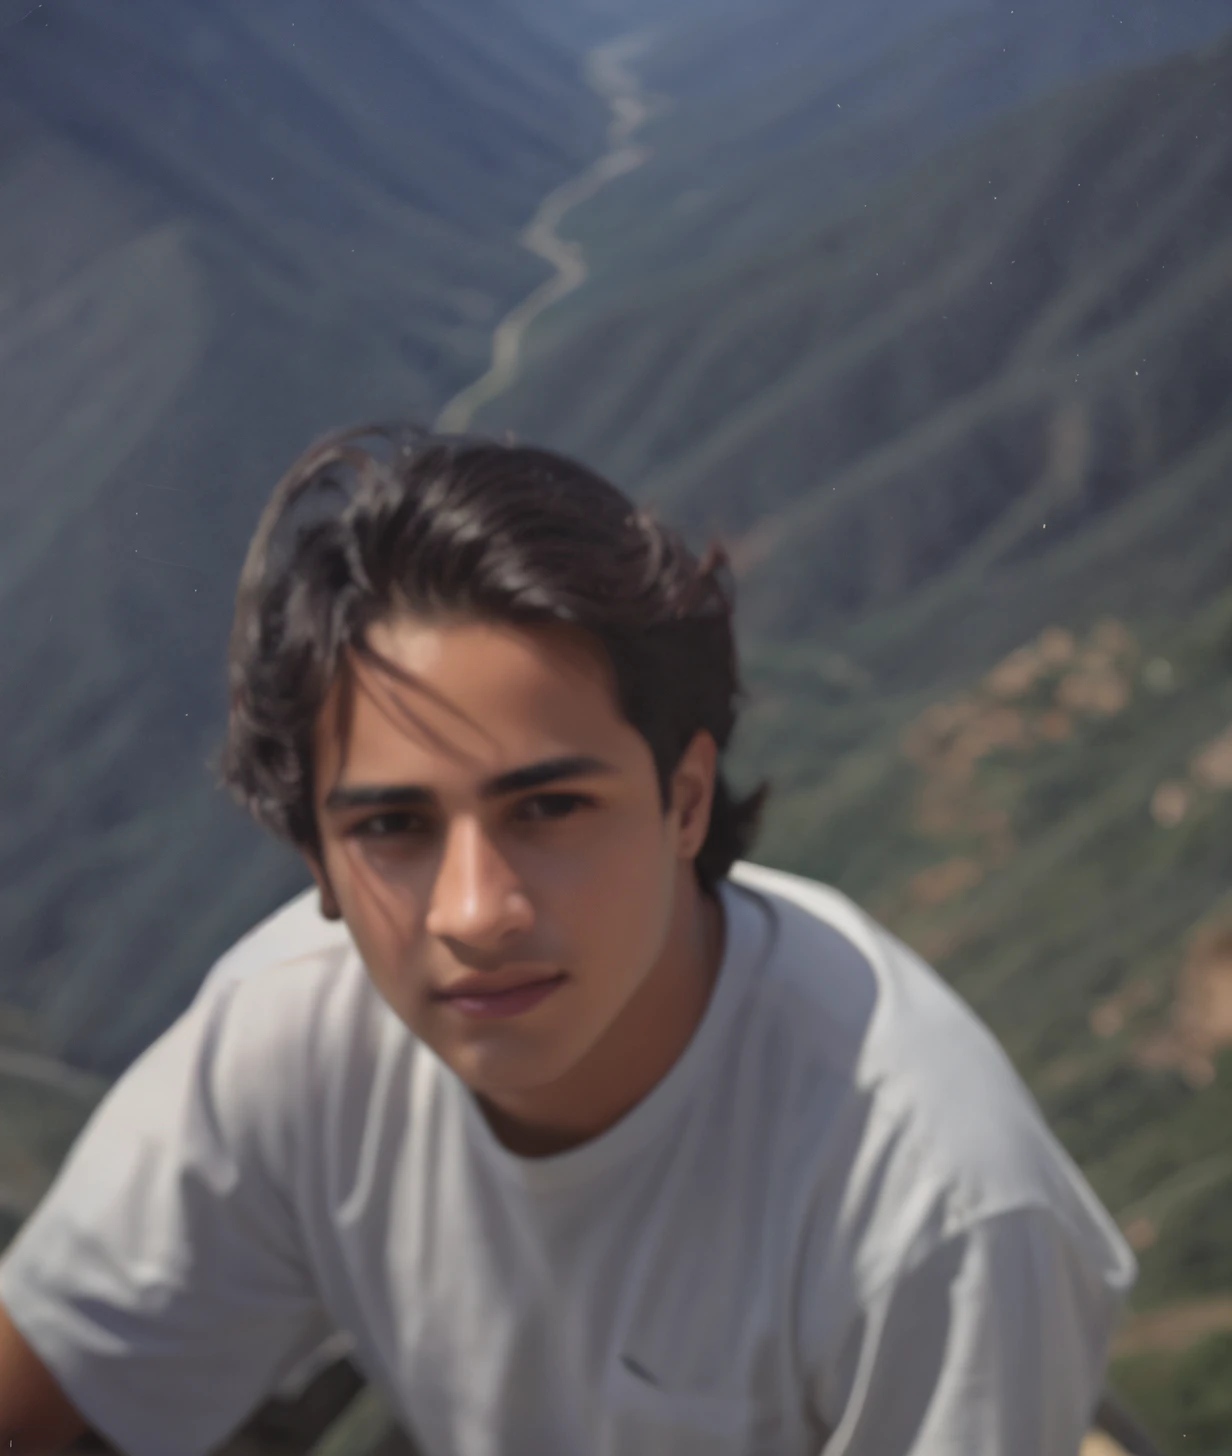 Adolescente sentados 在山顶上 com vista para o vale, 在山上, 在山顶上, 在山里, 在山顶上, 在山顶上, 在群山中, 拍摄于 21 世纪初, 在悬崖上, 17岁左右, 棕色眼睛, 超写实照片, 聚焦照片, 穿着白衬衫, 随意的